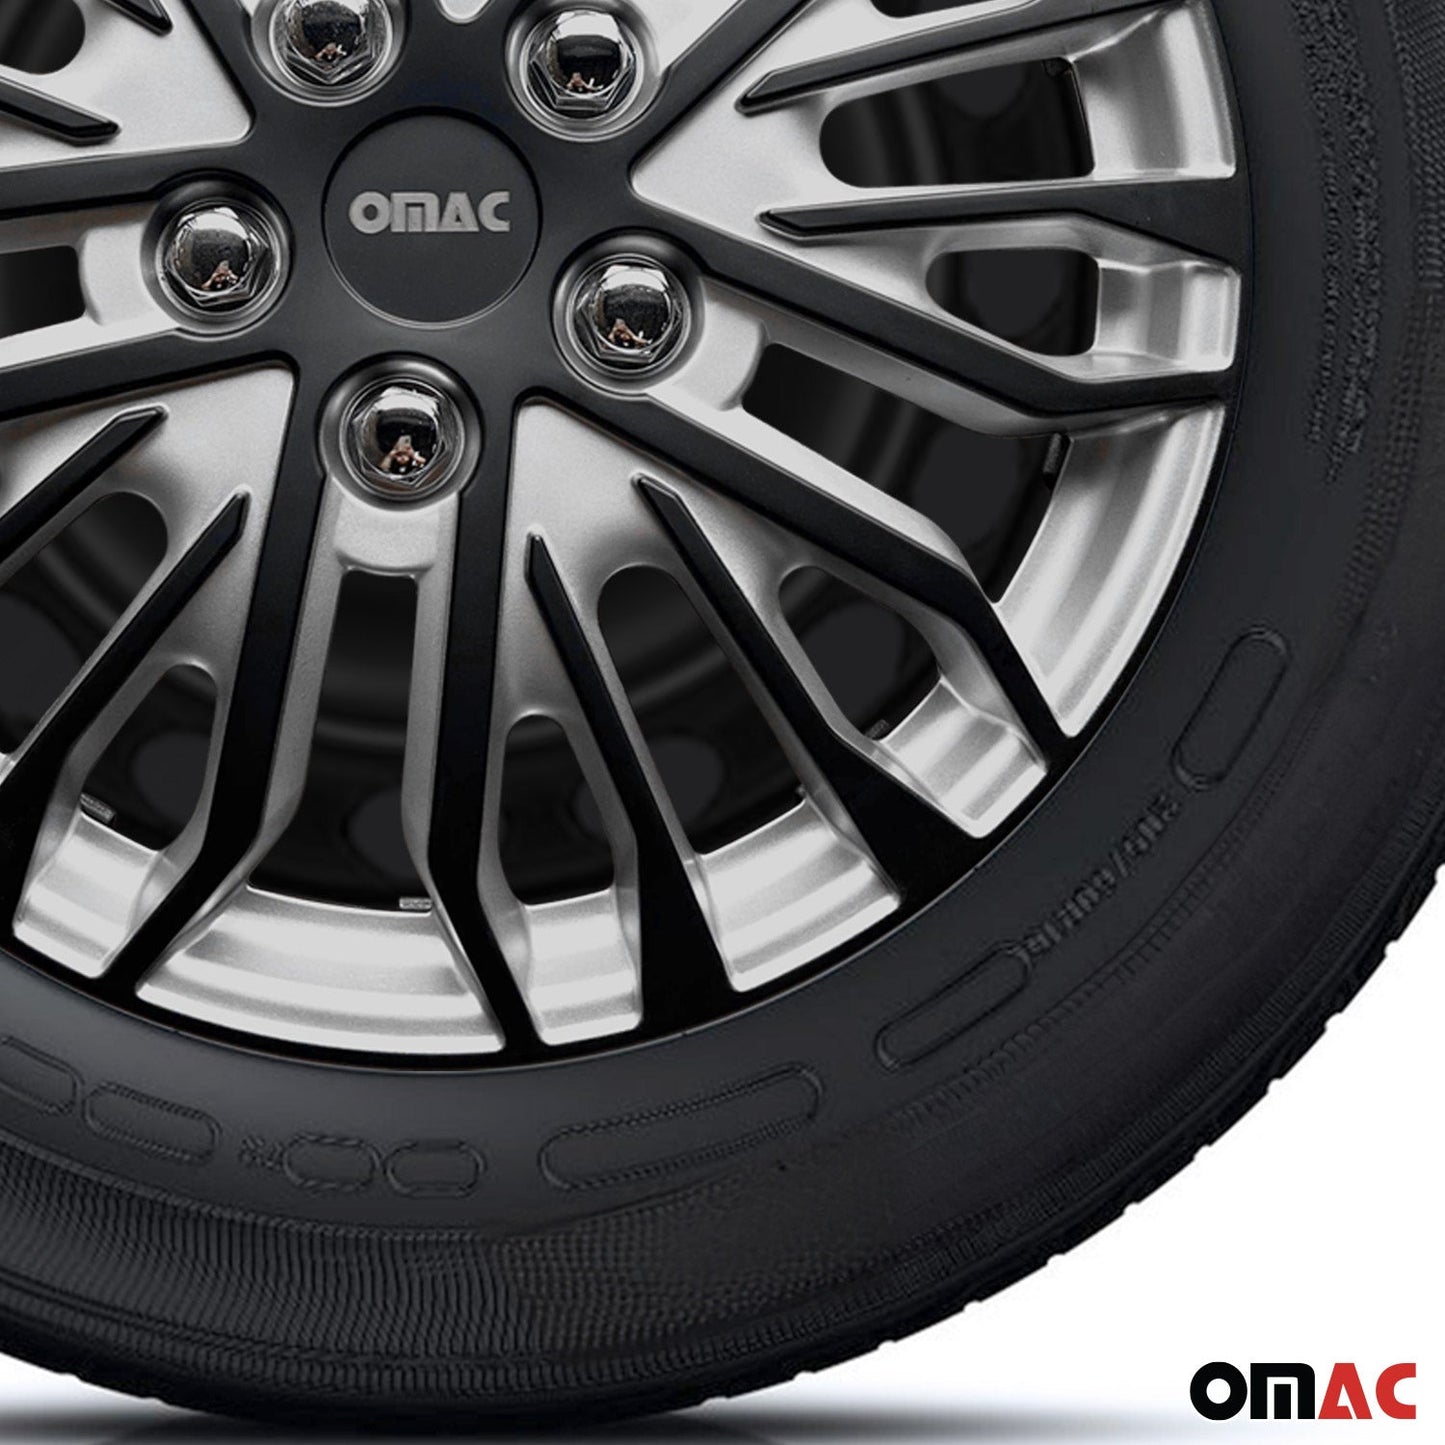 OMAC 14" Wheel Covers Guard Hub Caps Durable Snap On ABS Silver Matt Black 4x OMAC-WE41-SVMBK14